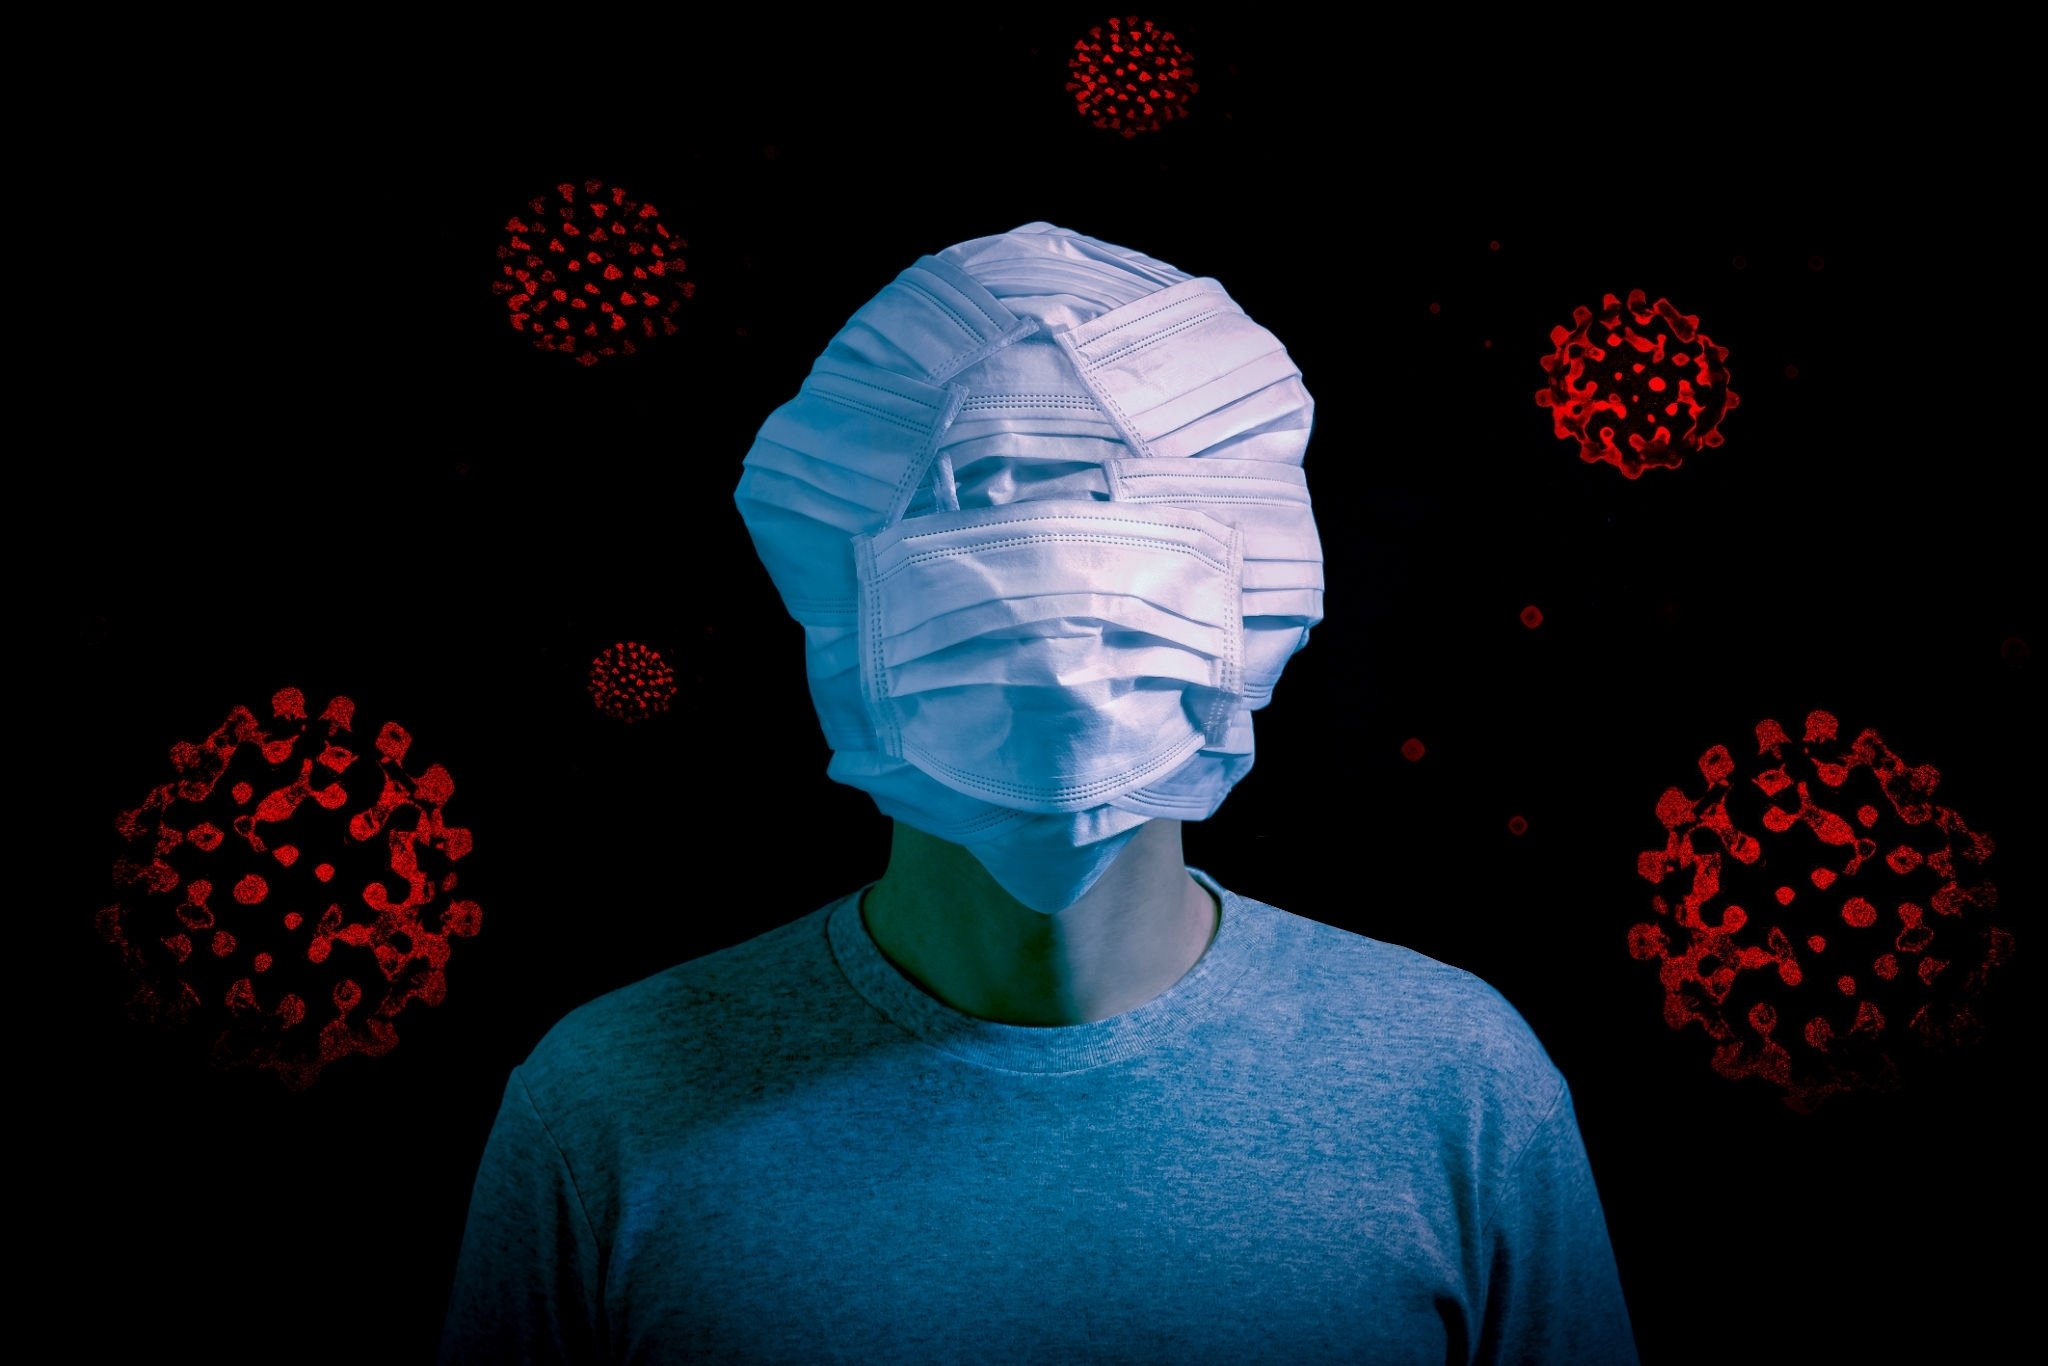 2020, an eventful year overshadowed by coronavirus pandemic | Daily Sabah